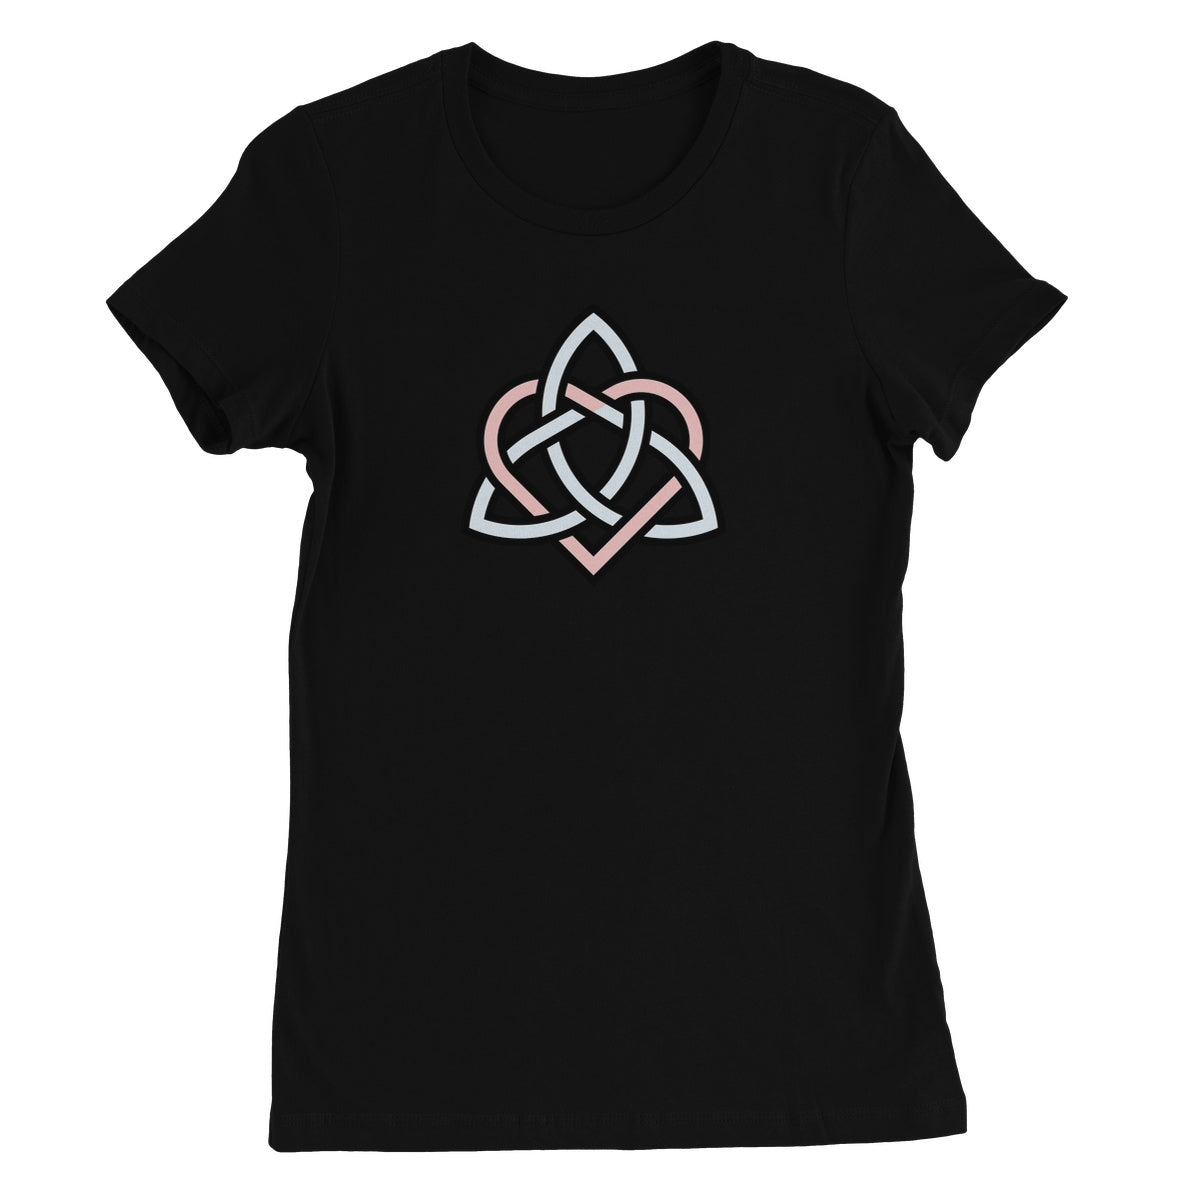 Woven Celtic Hearts Women's T-Shirt